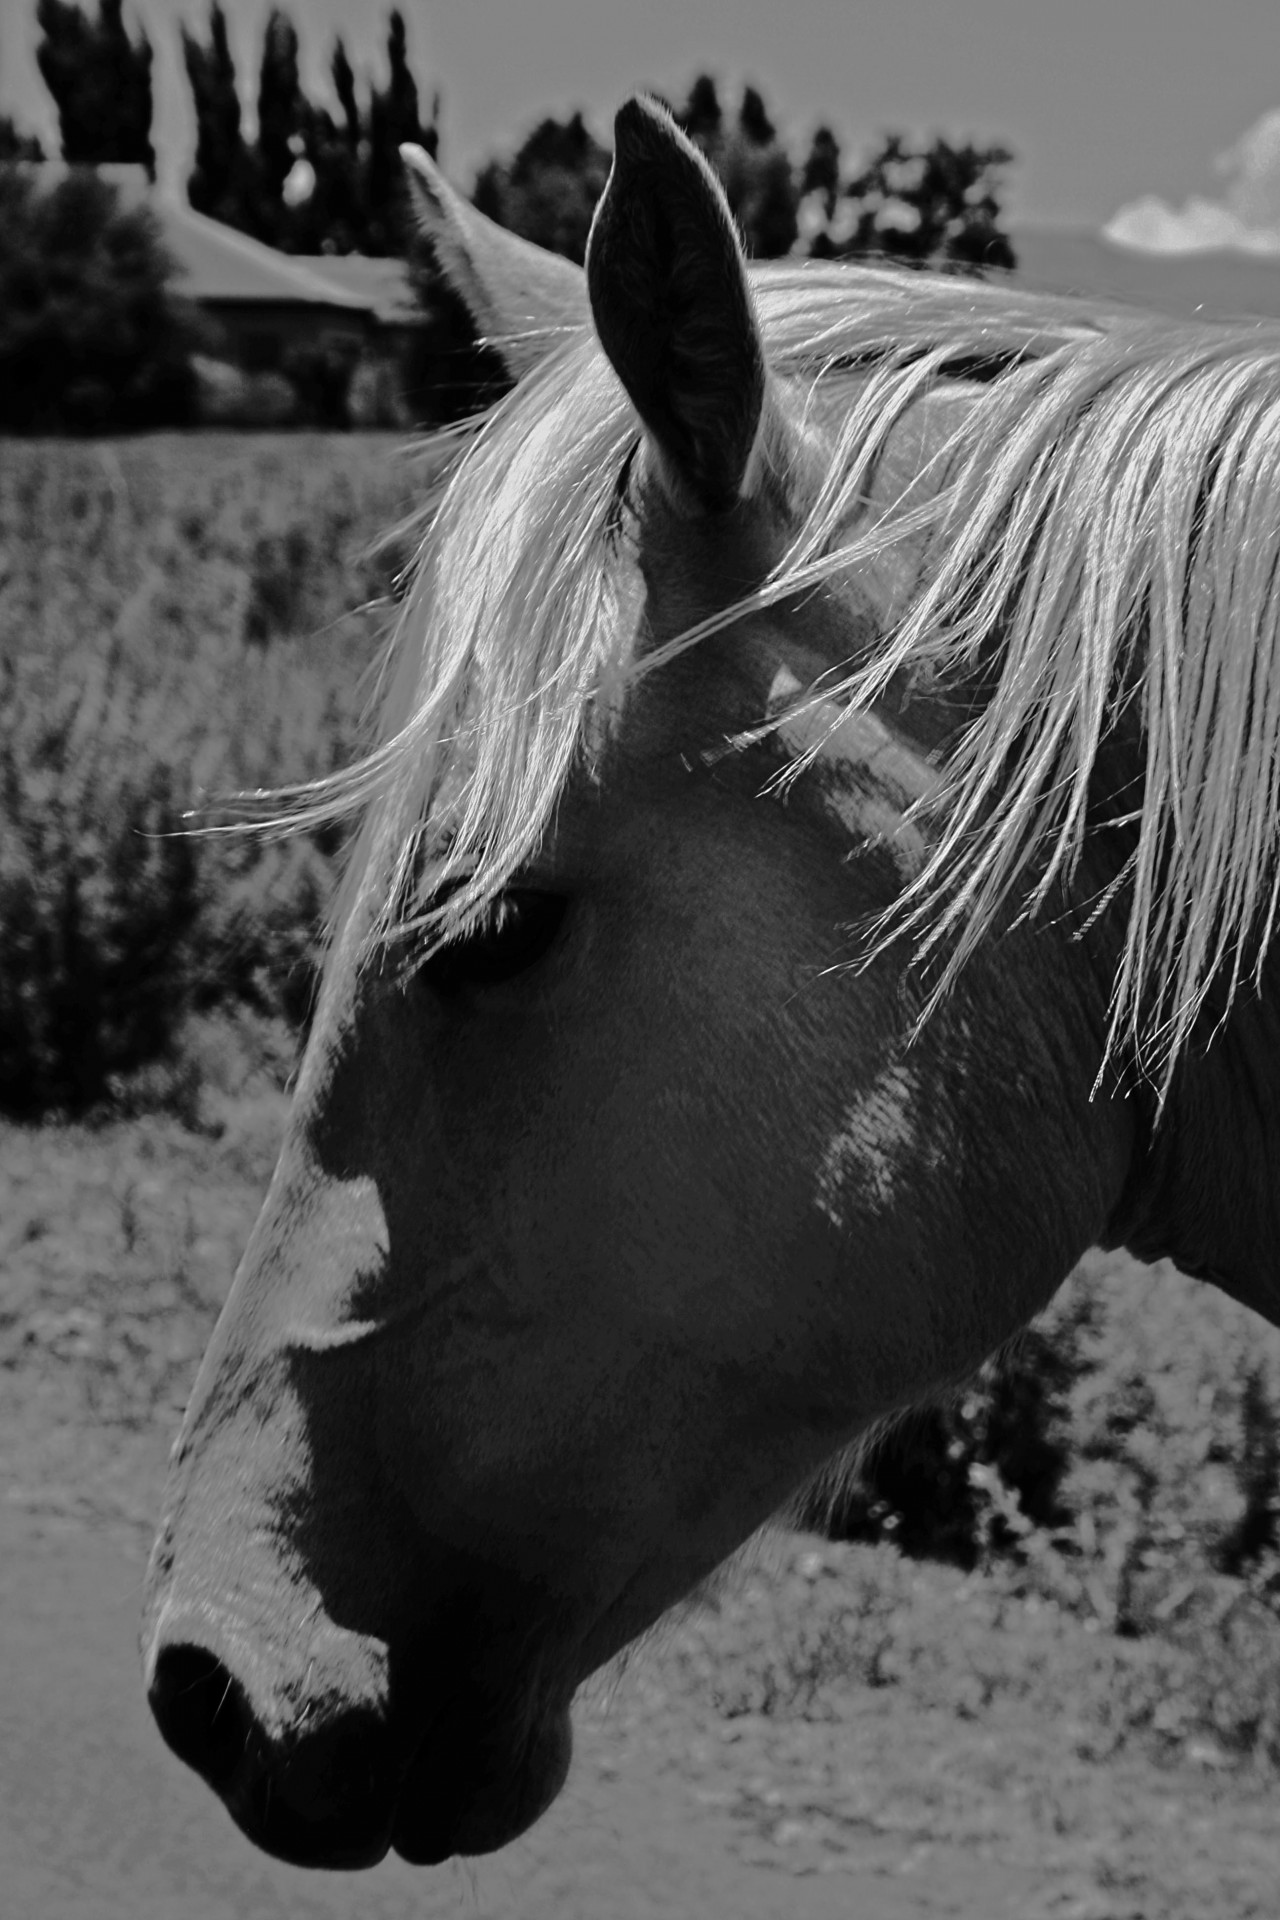 Low Key Black & White Head Of Horse